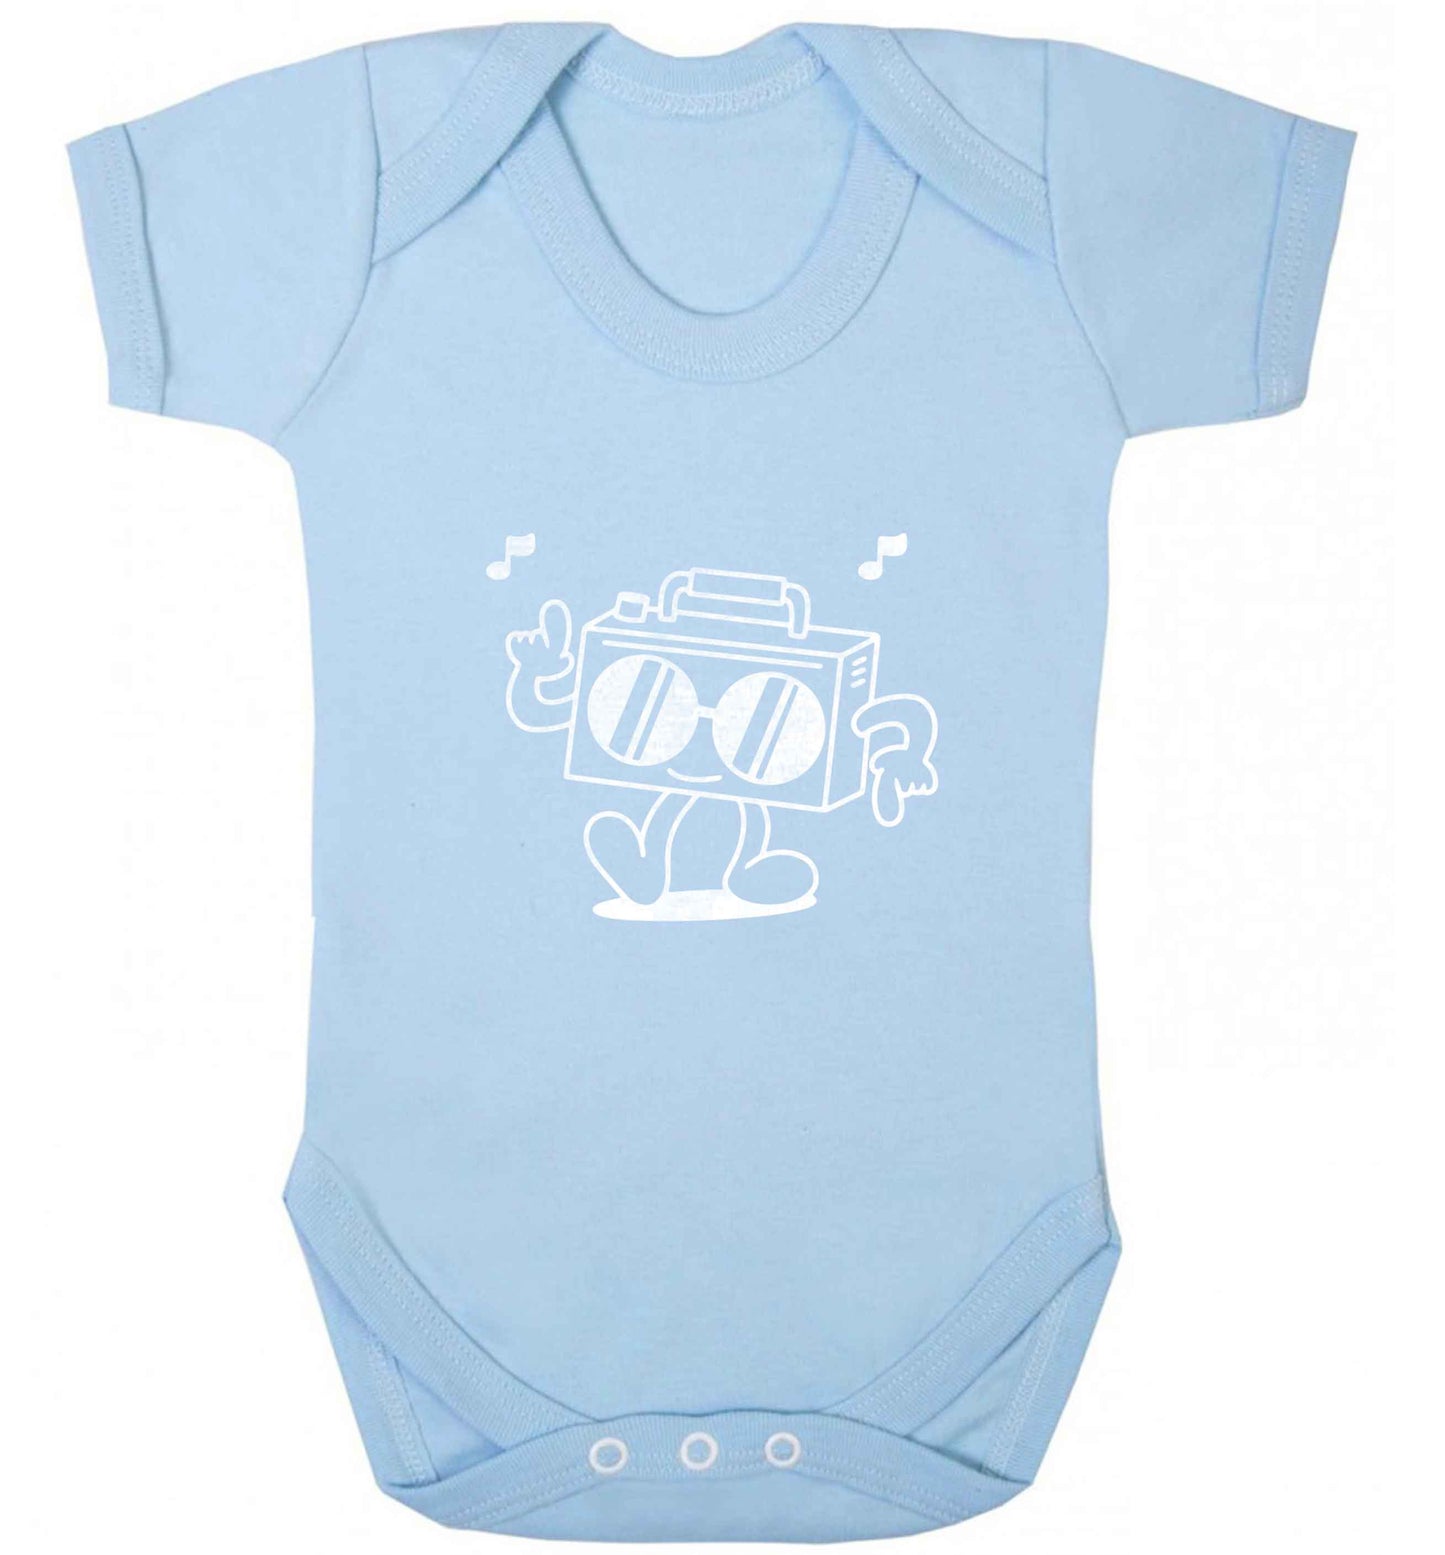 Boombox baby vest pale blue 18-24 months